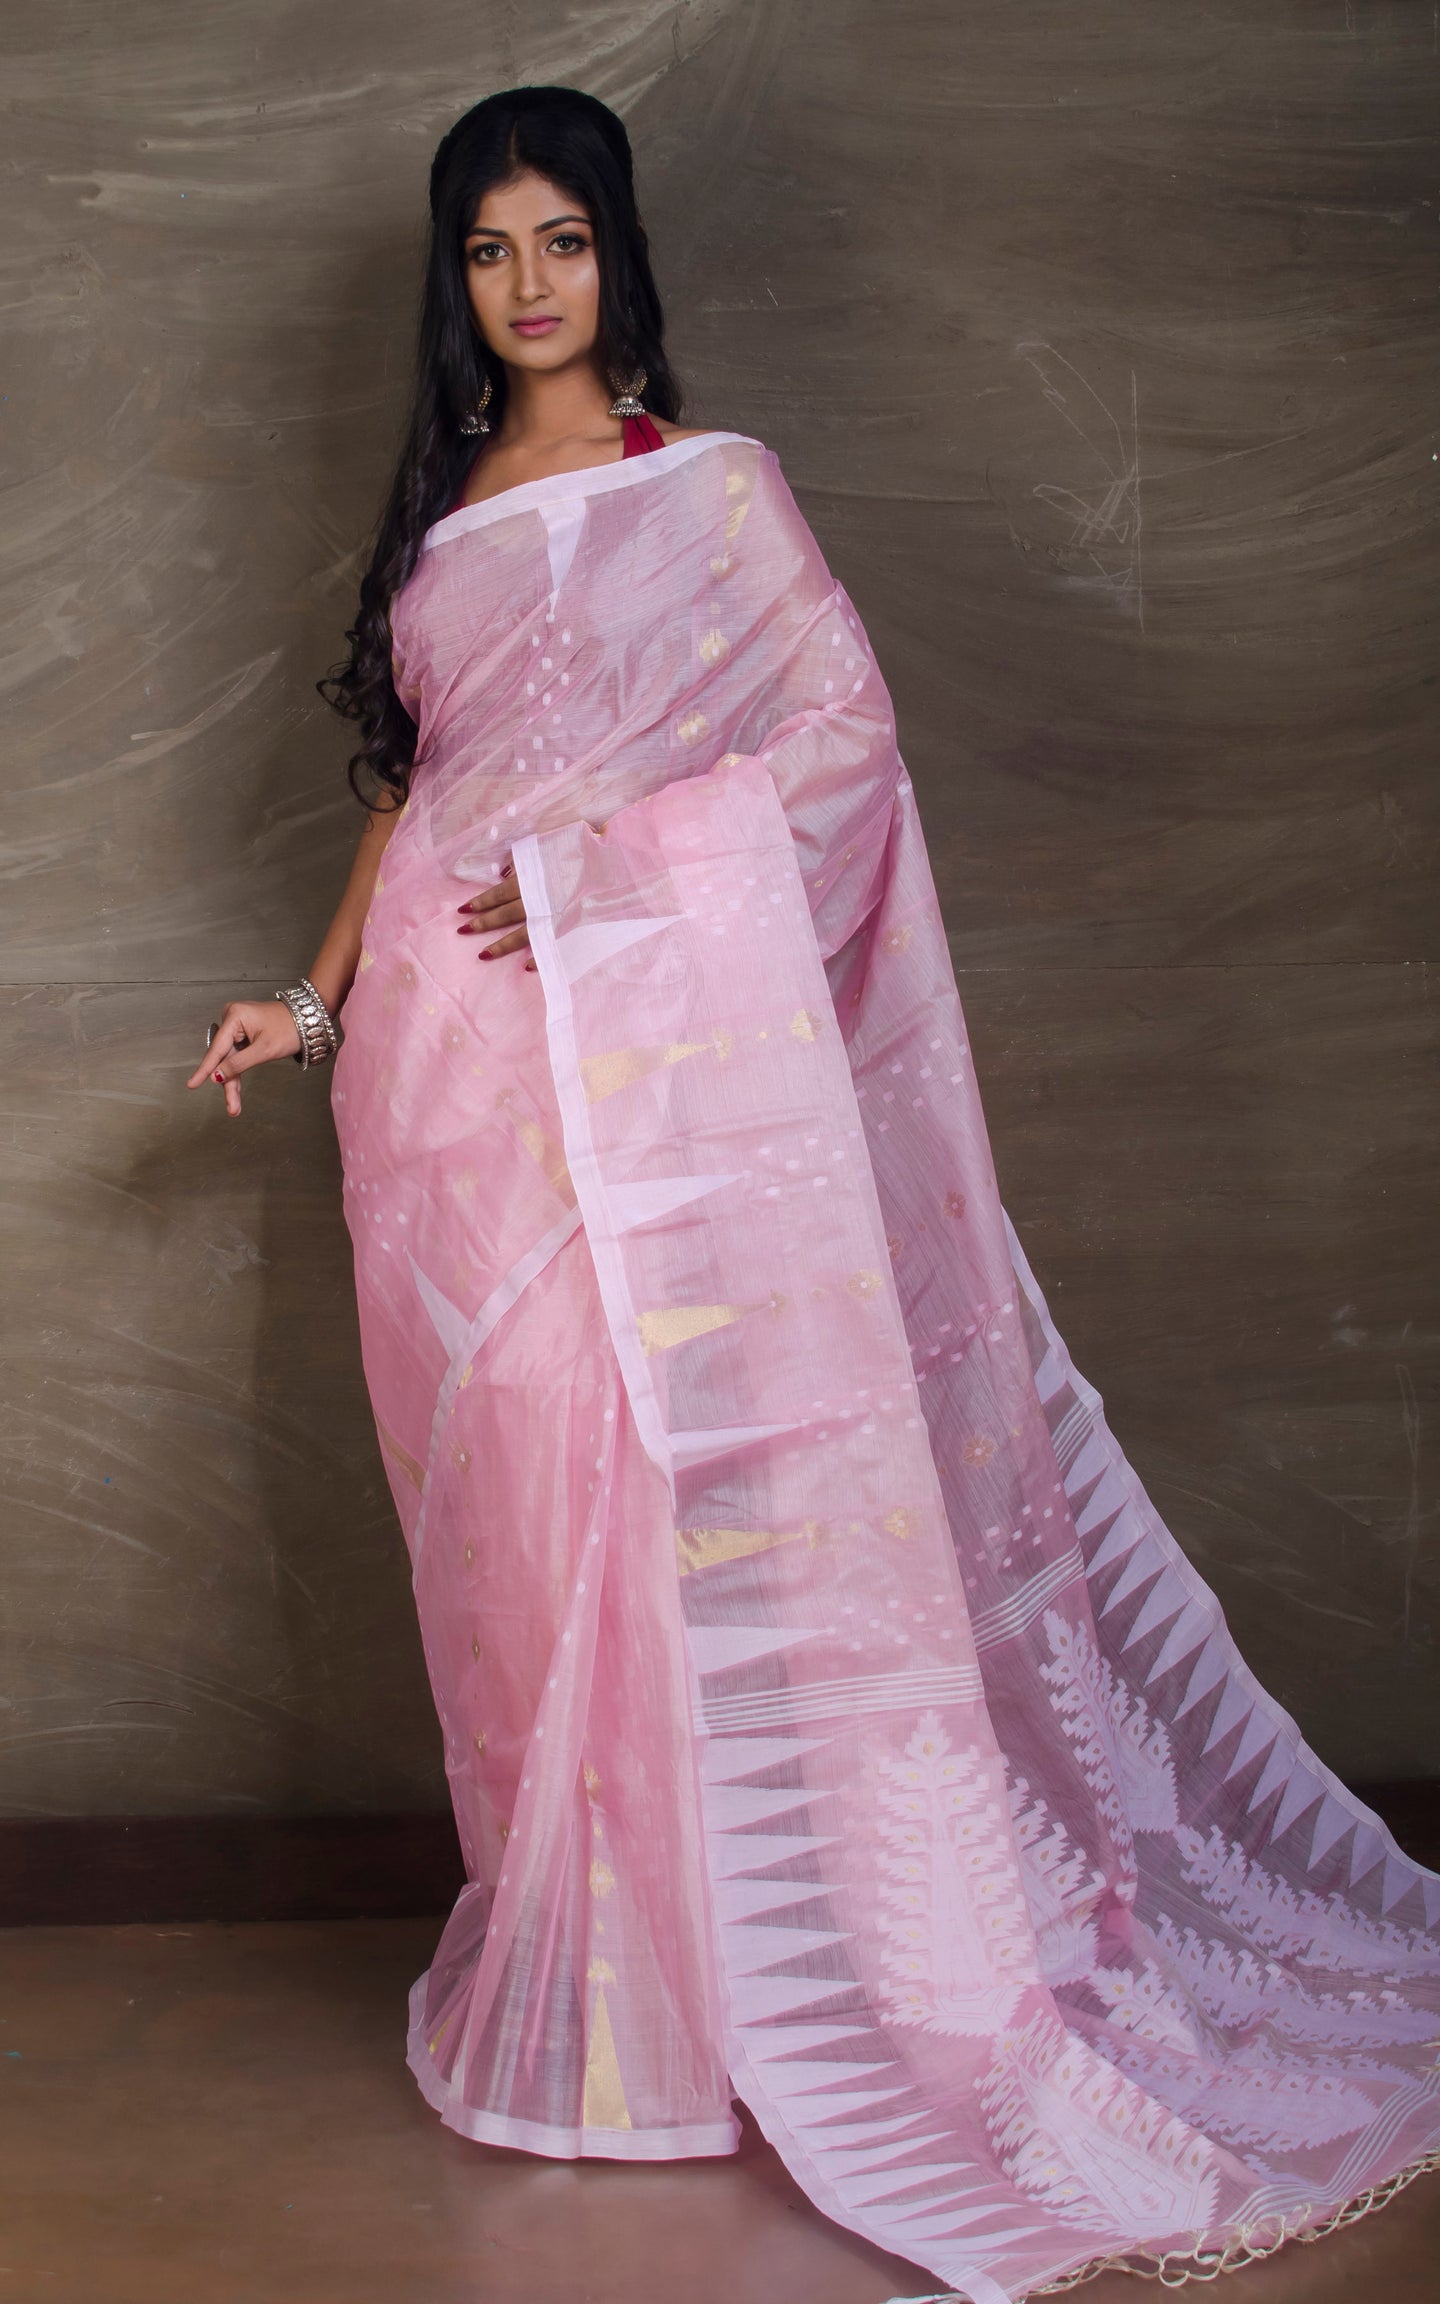 Handloom Tussar Silk Jamdani Saree in Baby Pink, White and Gold - Bengal Looms India